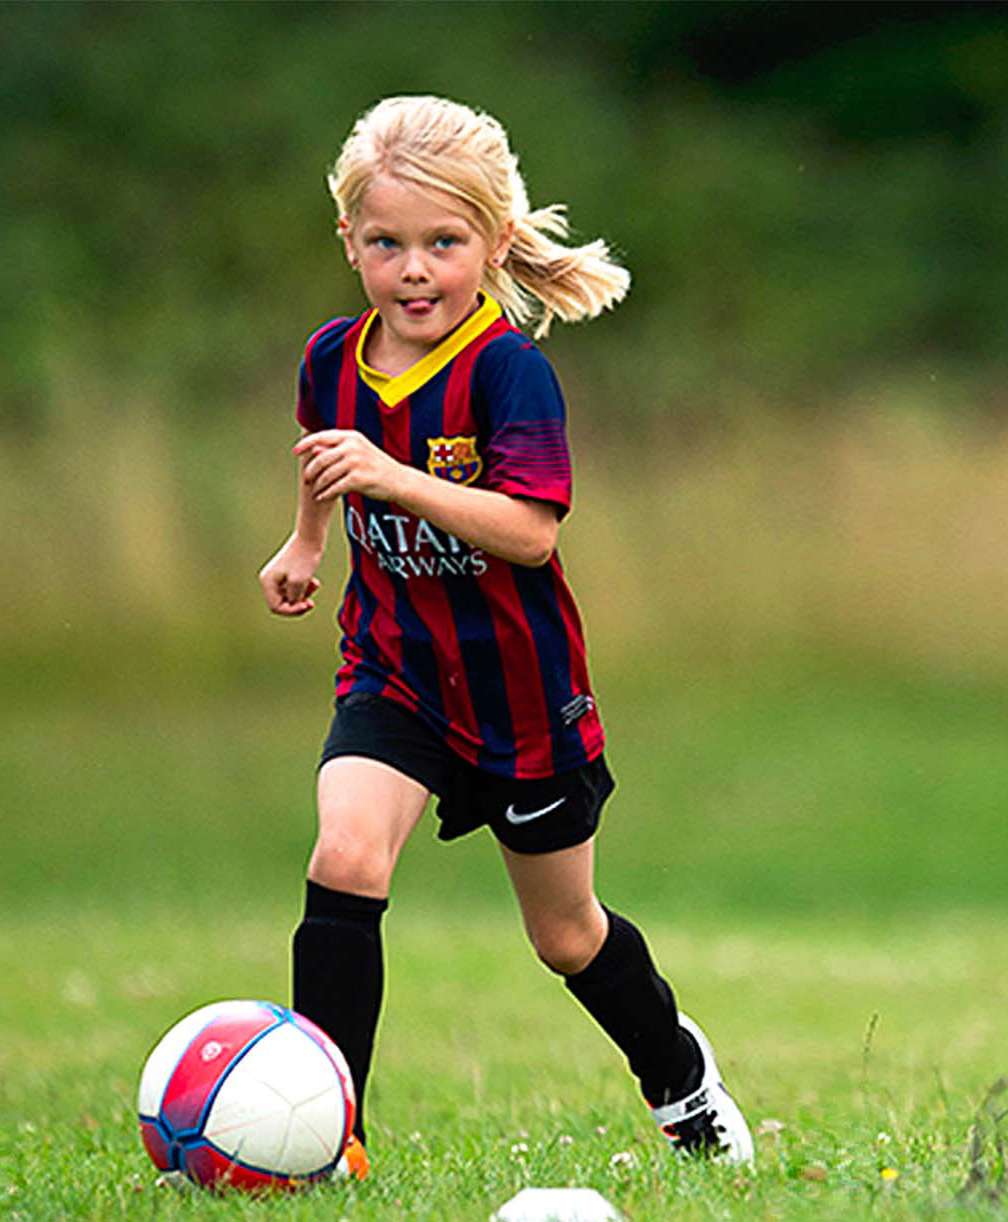 young girl with blonde hair kicks ball, she wears a FC Barcelona kit